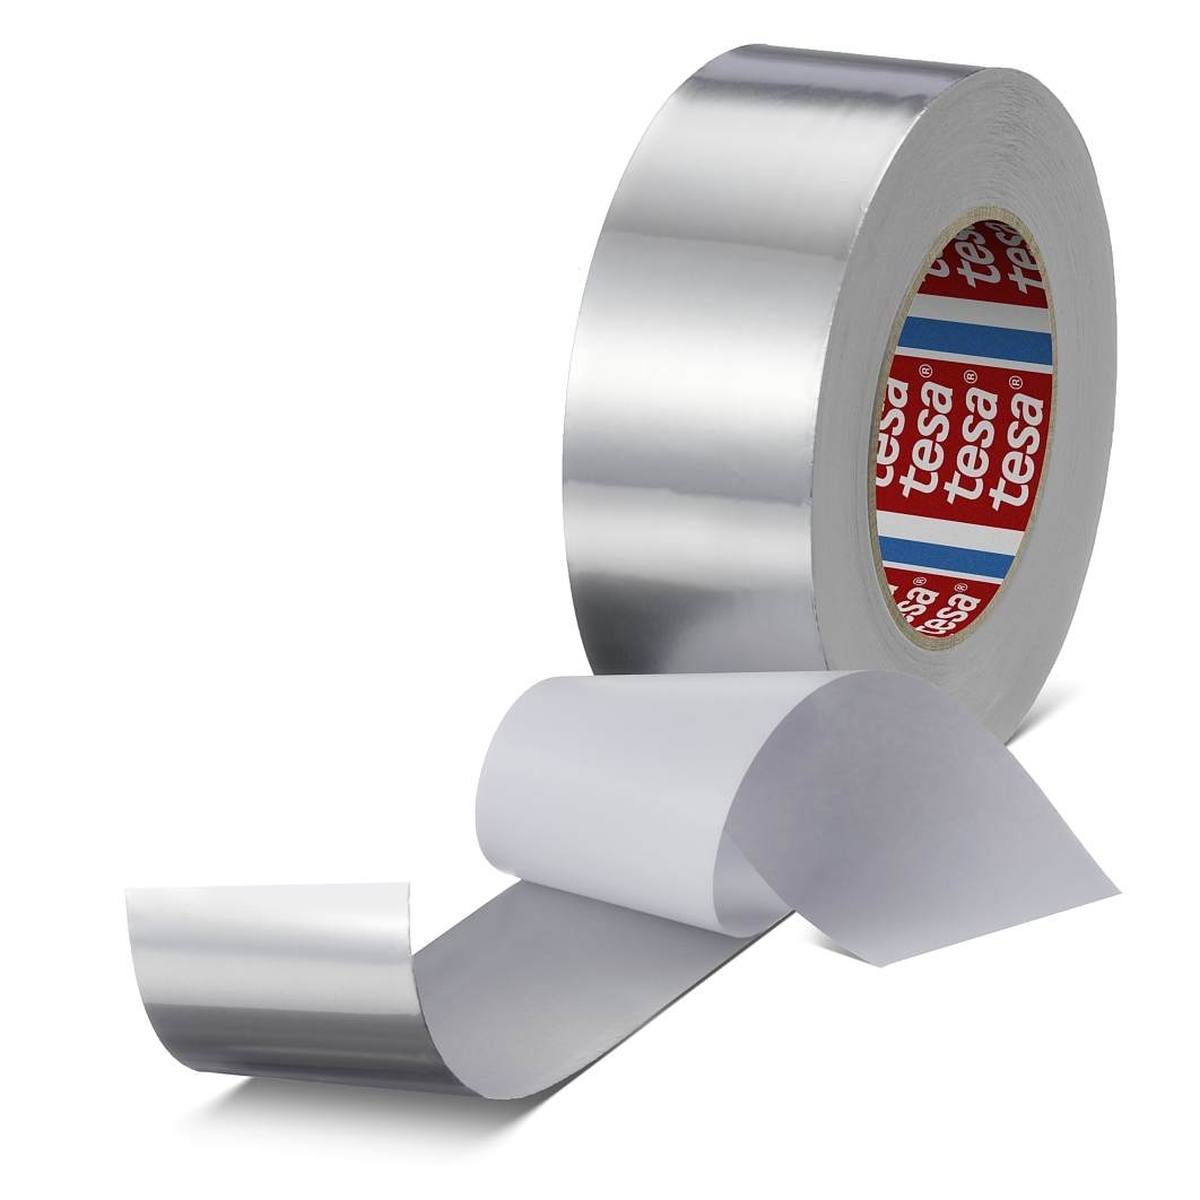 Buy tesa SPVC EMBOSSED 67001-00001-00 Plastering tape tesa